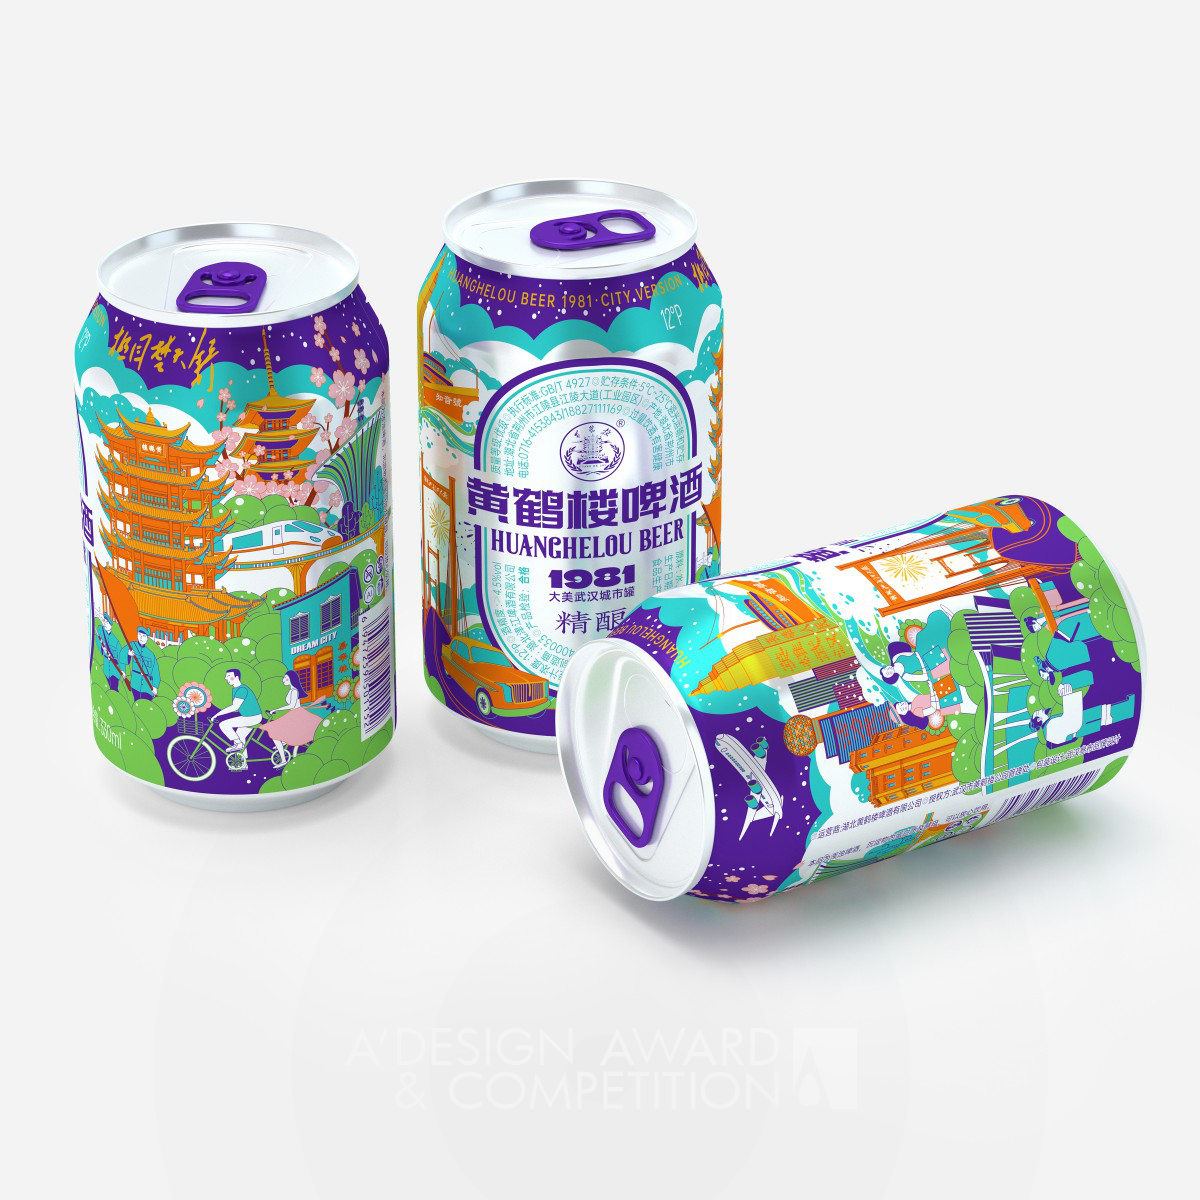 Huanghelou Beer Packaging: A City's Essence in Every Sip